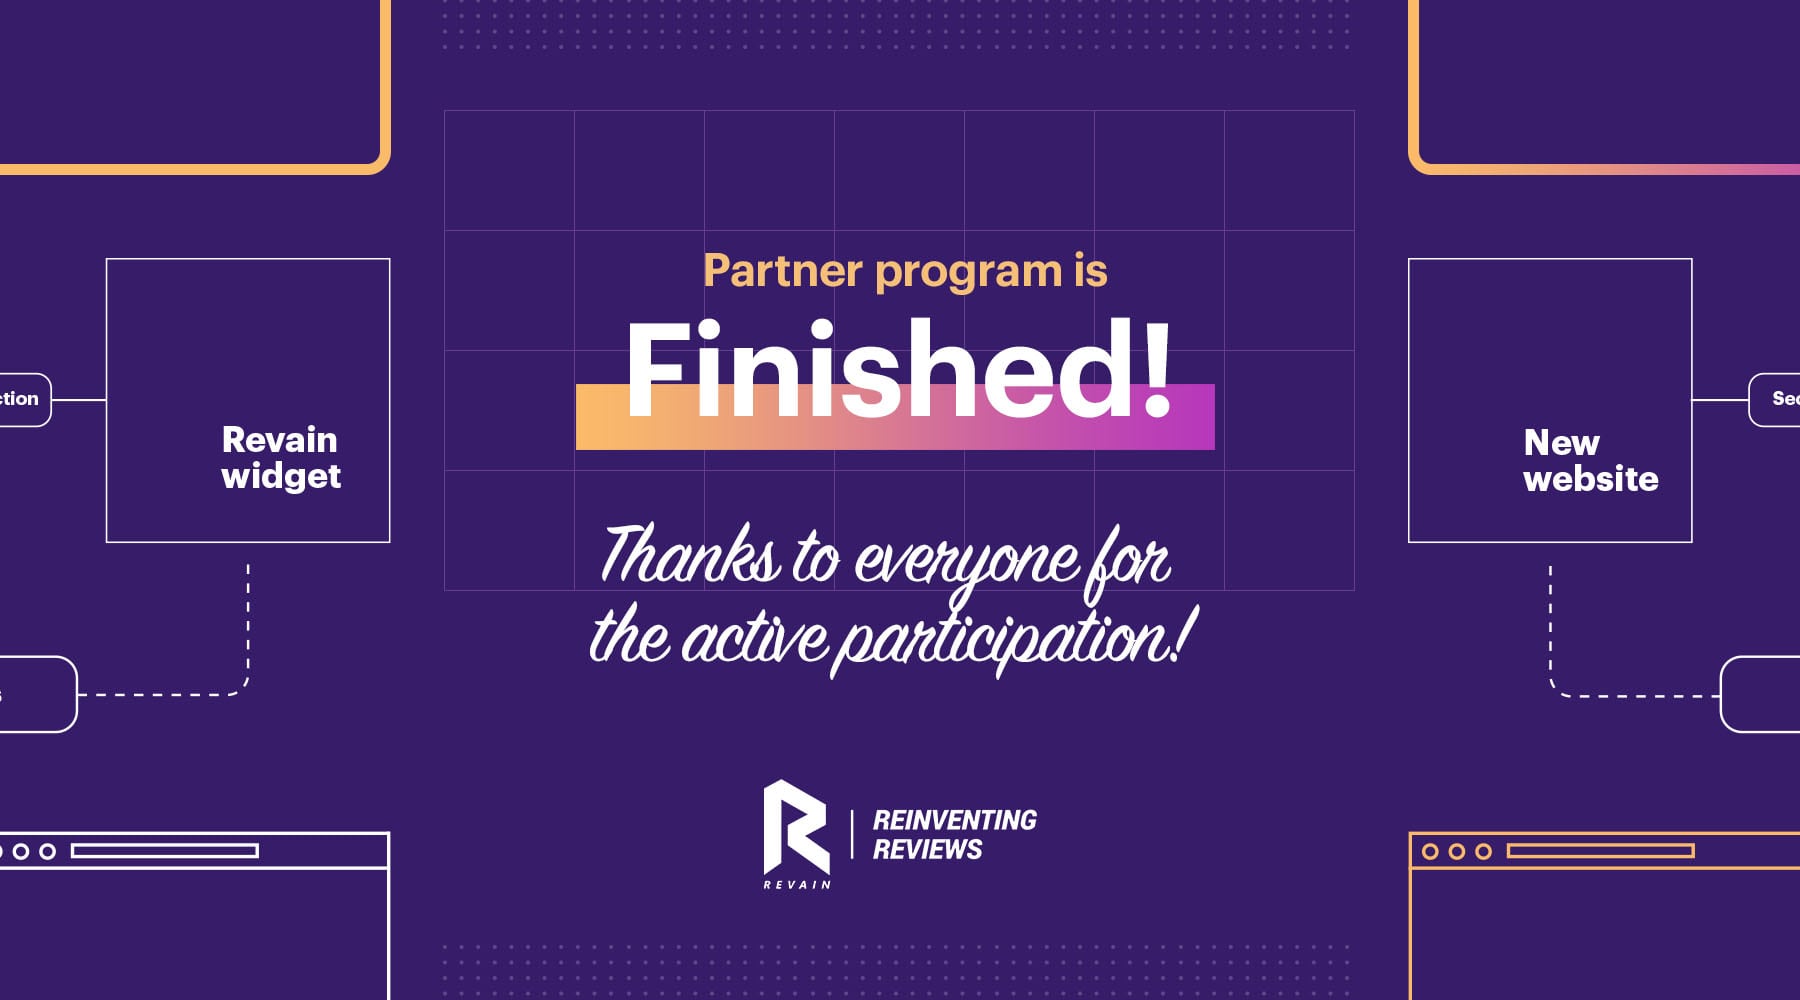 The Revain Widget partner program is finished